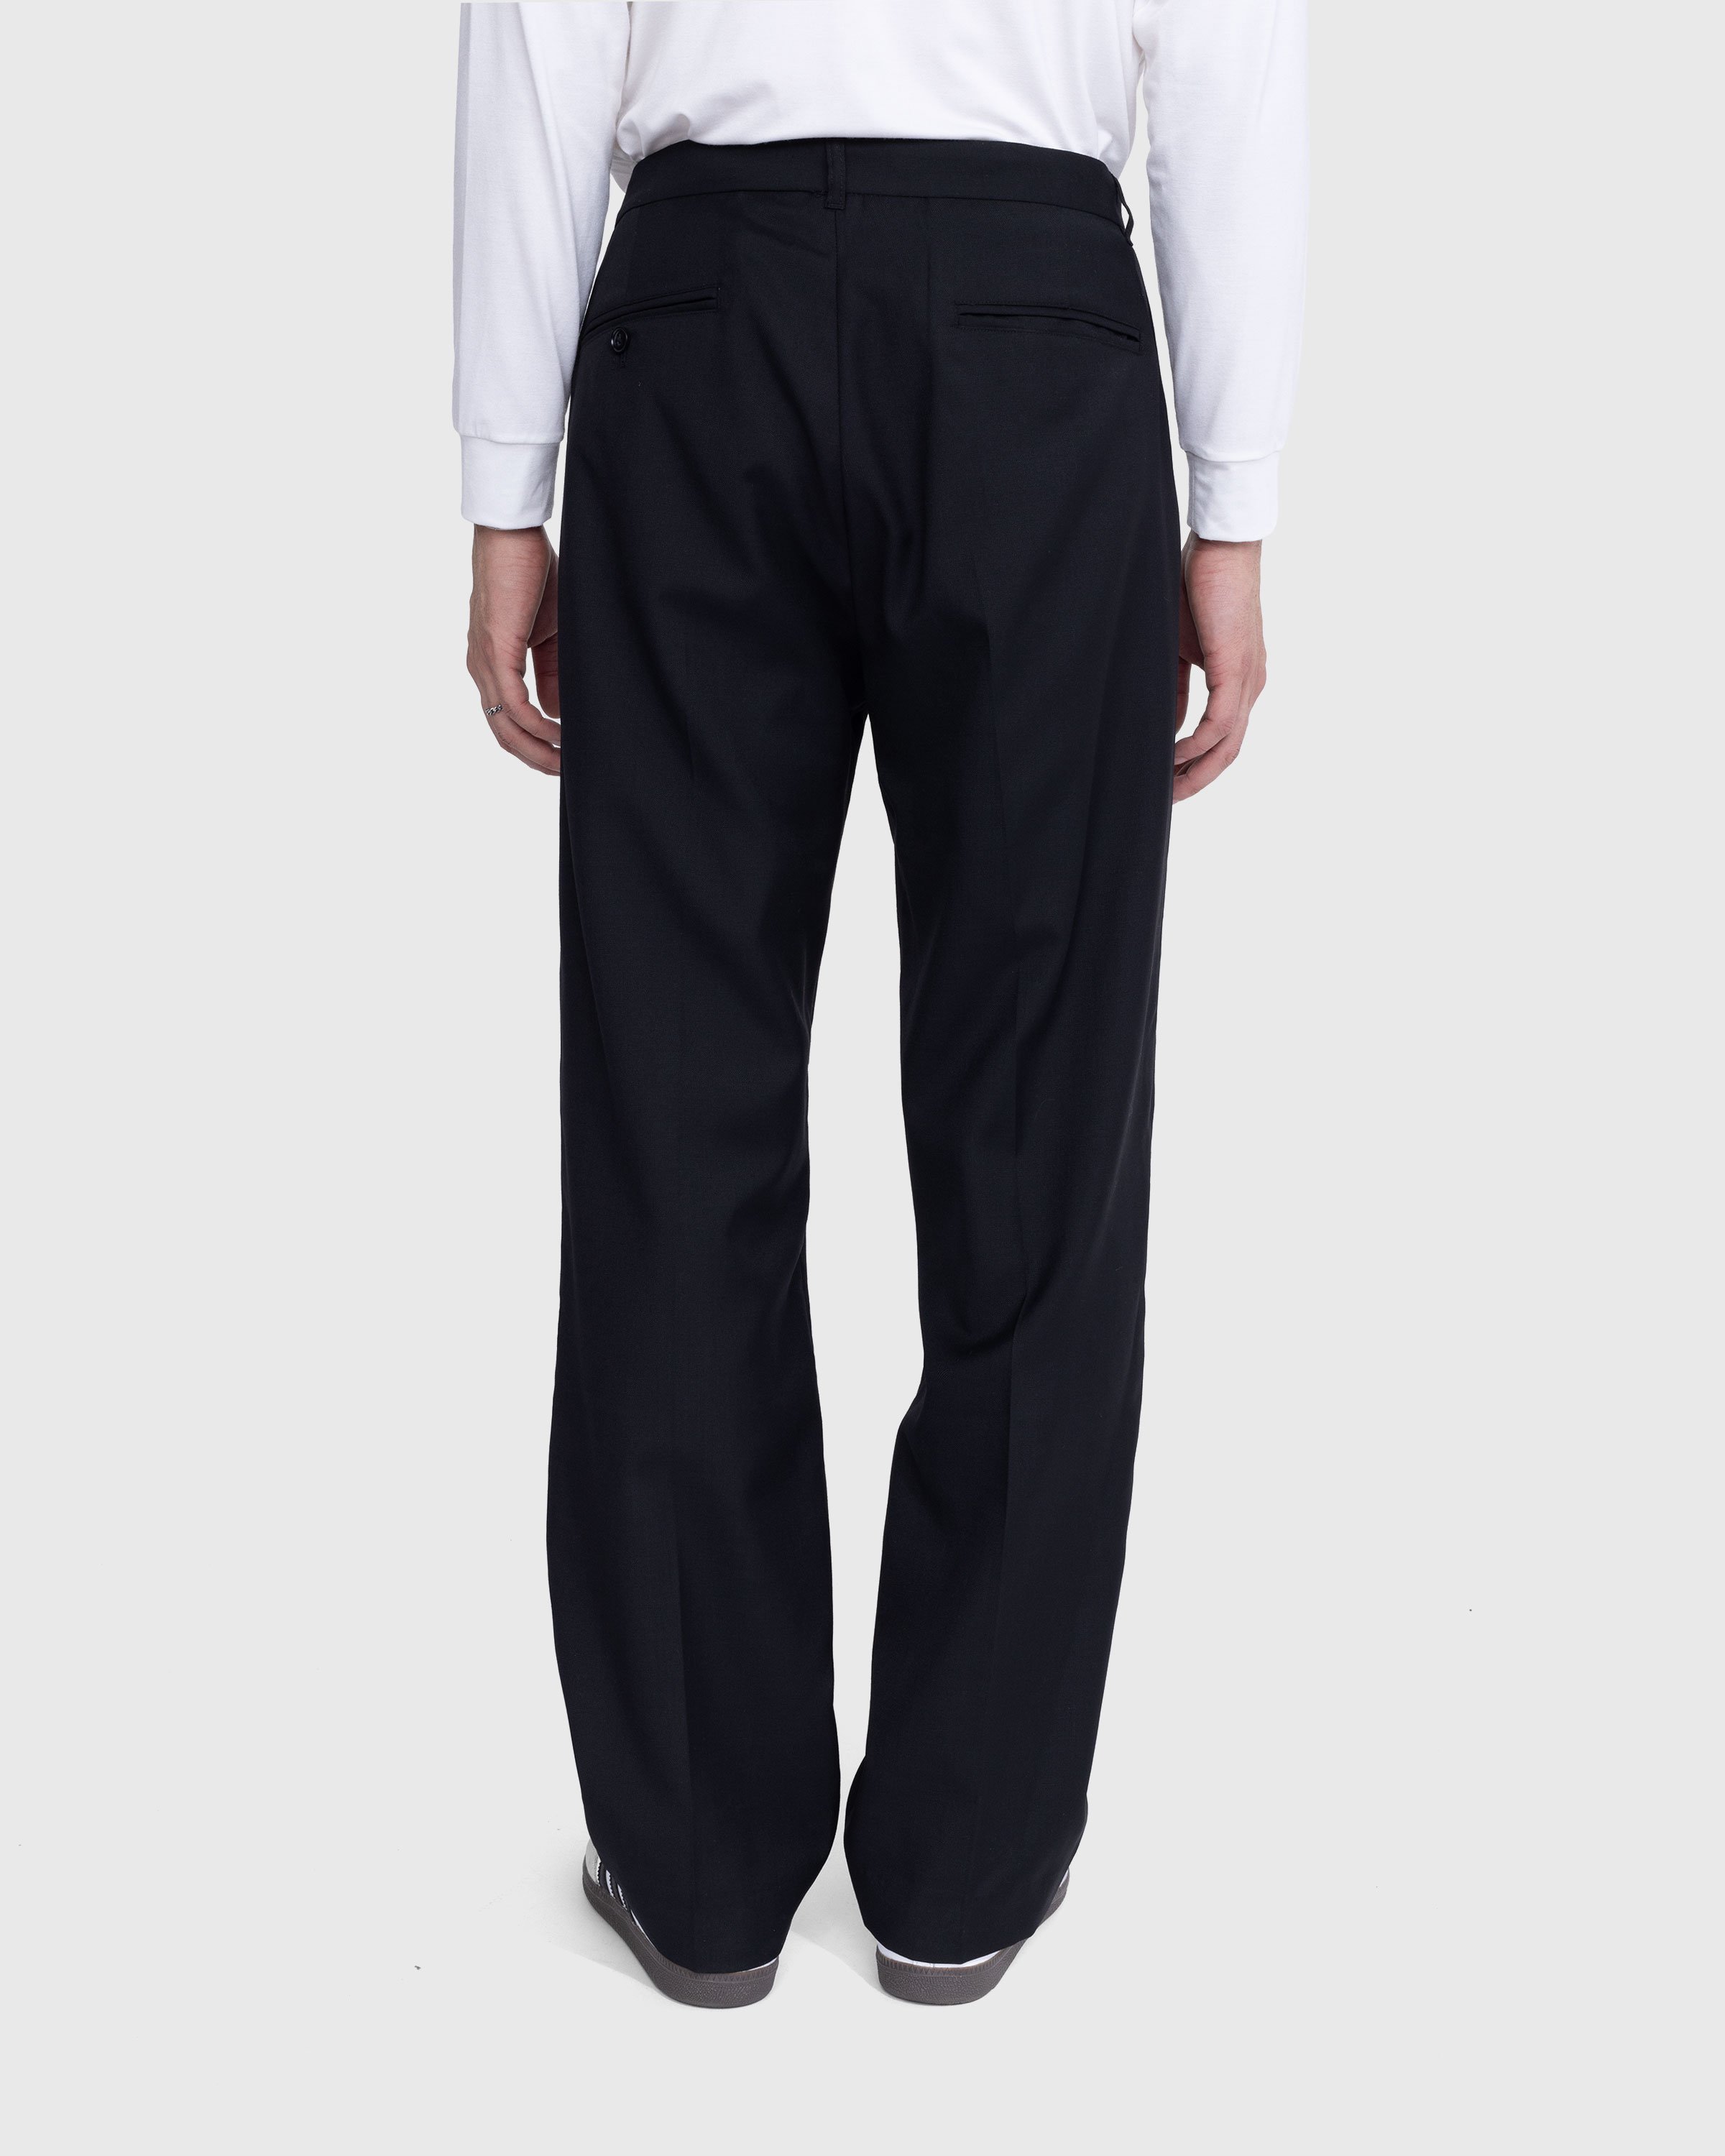 Highsnobiety - Tropical Wool Suiting Pants Black - Clothing - Black - Image 5